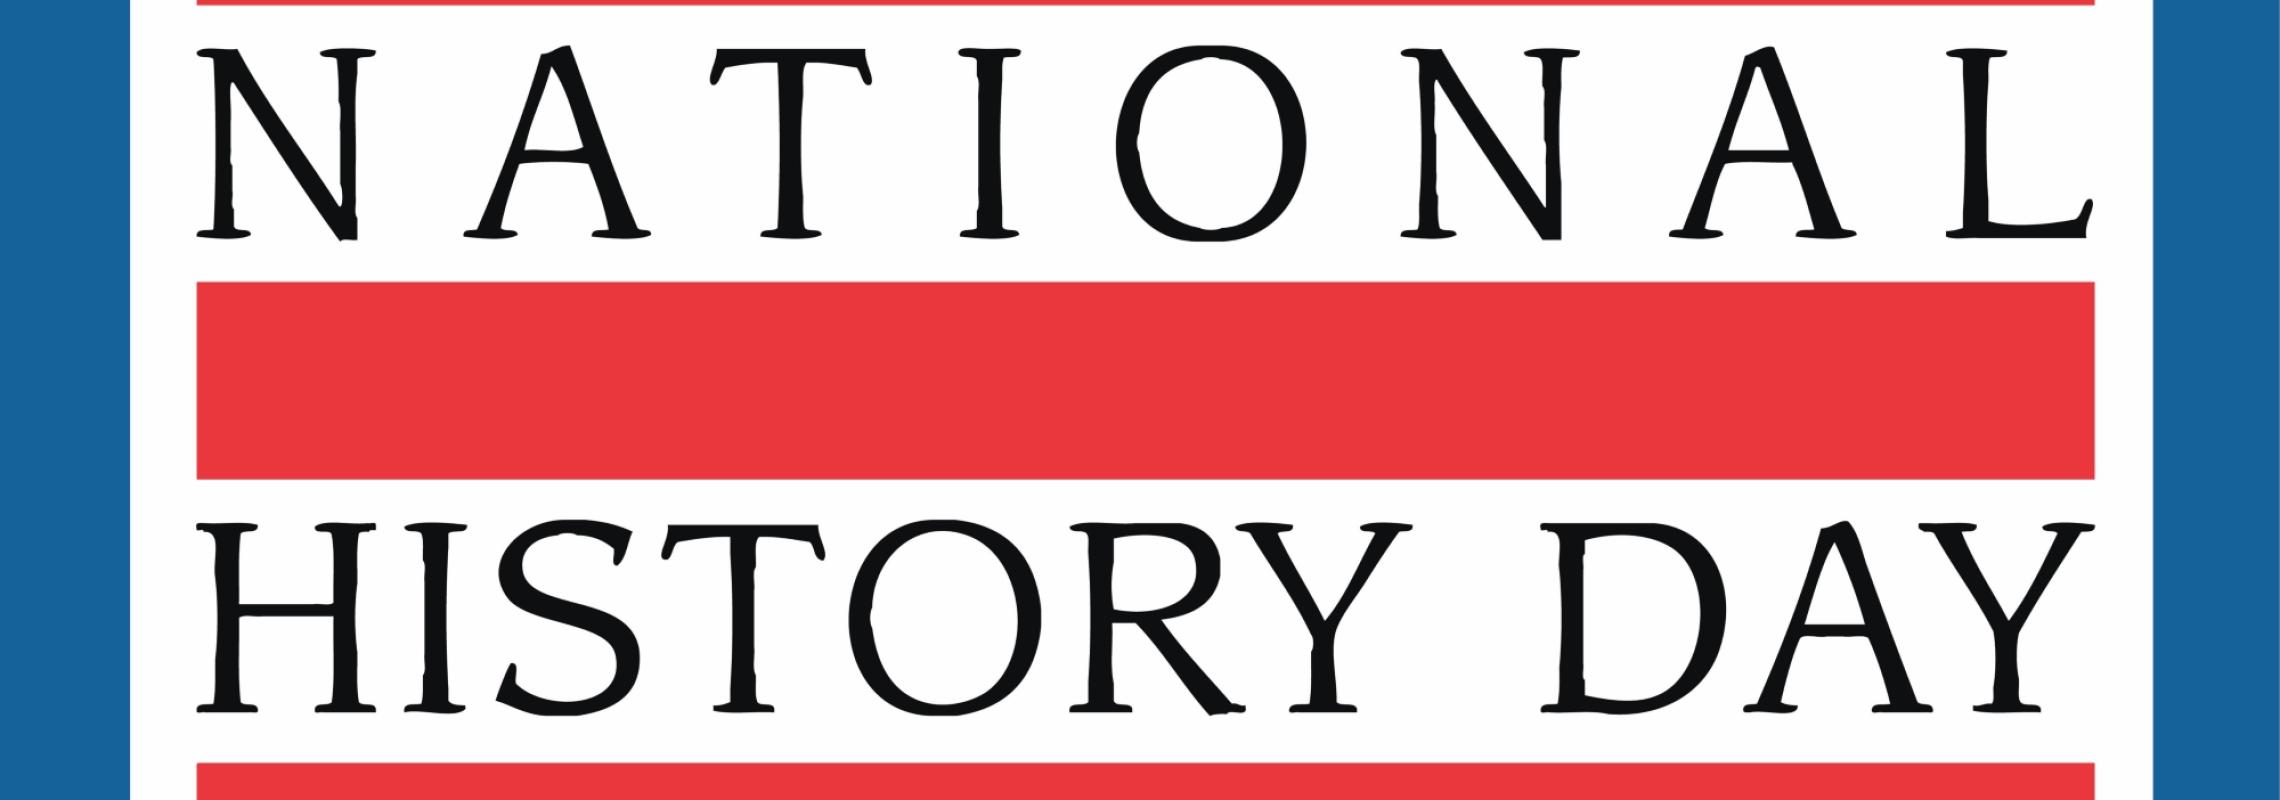 National History Day in Missouri logo